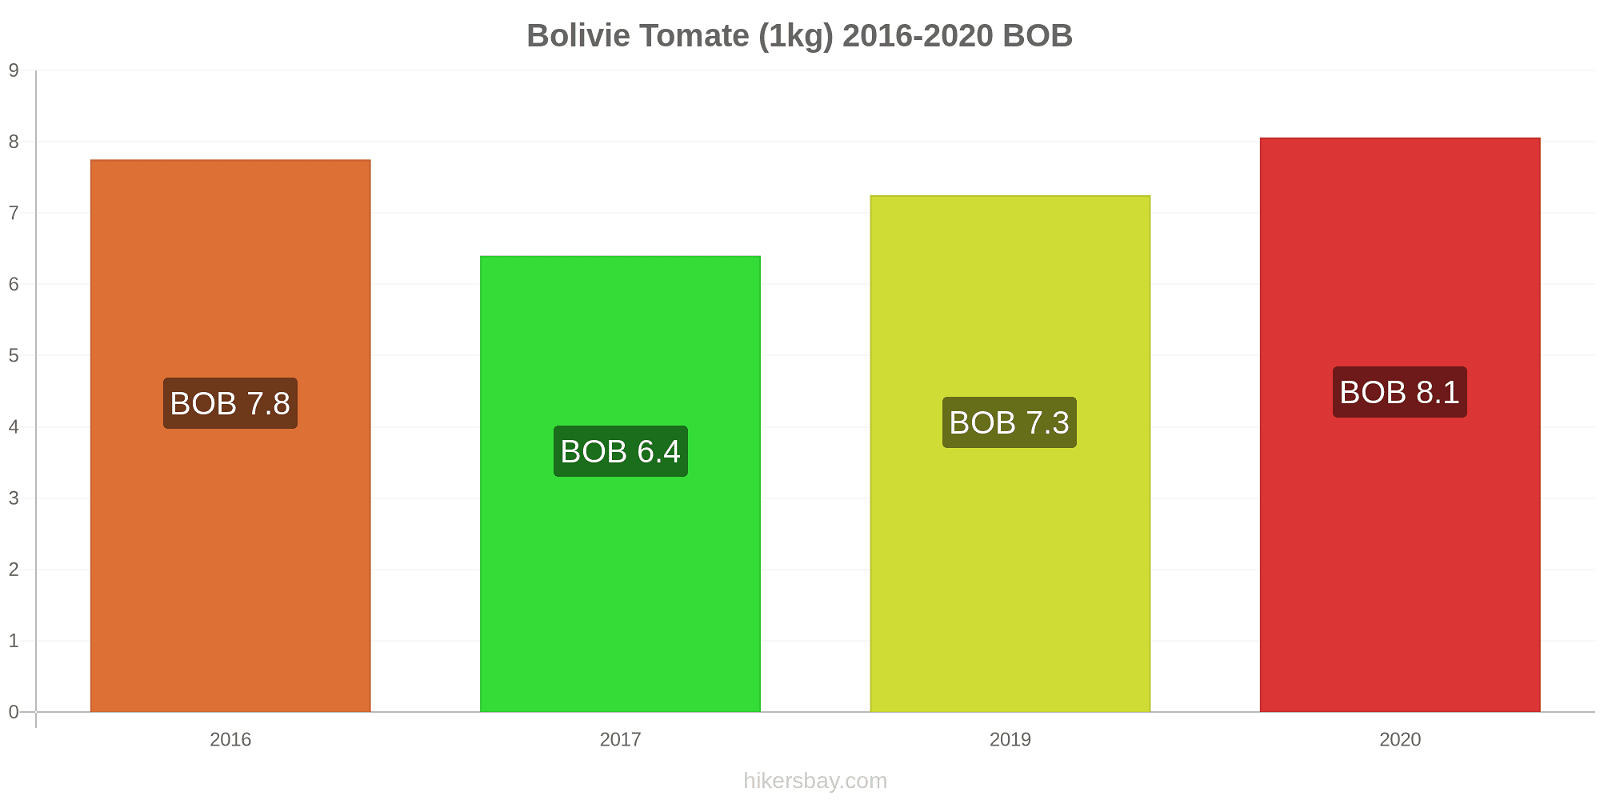 Bolivie changements de prix Tomate (1kg) hikersbay.com